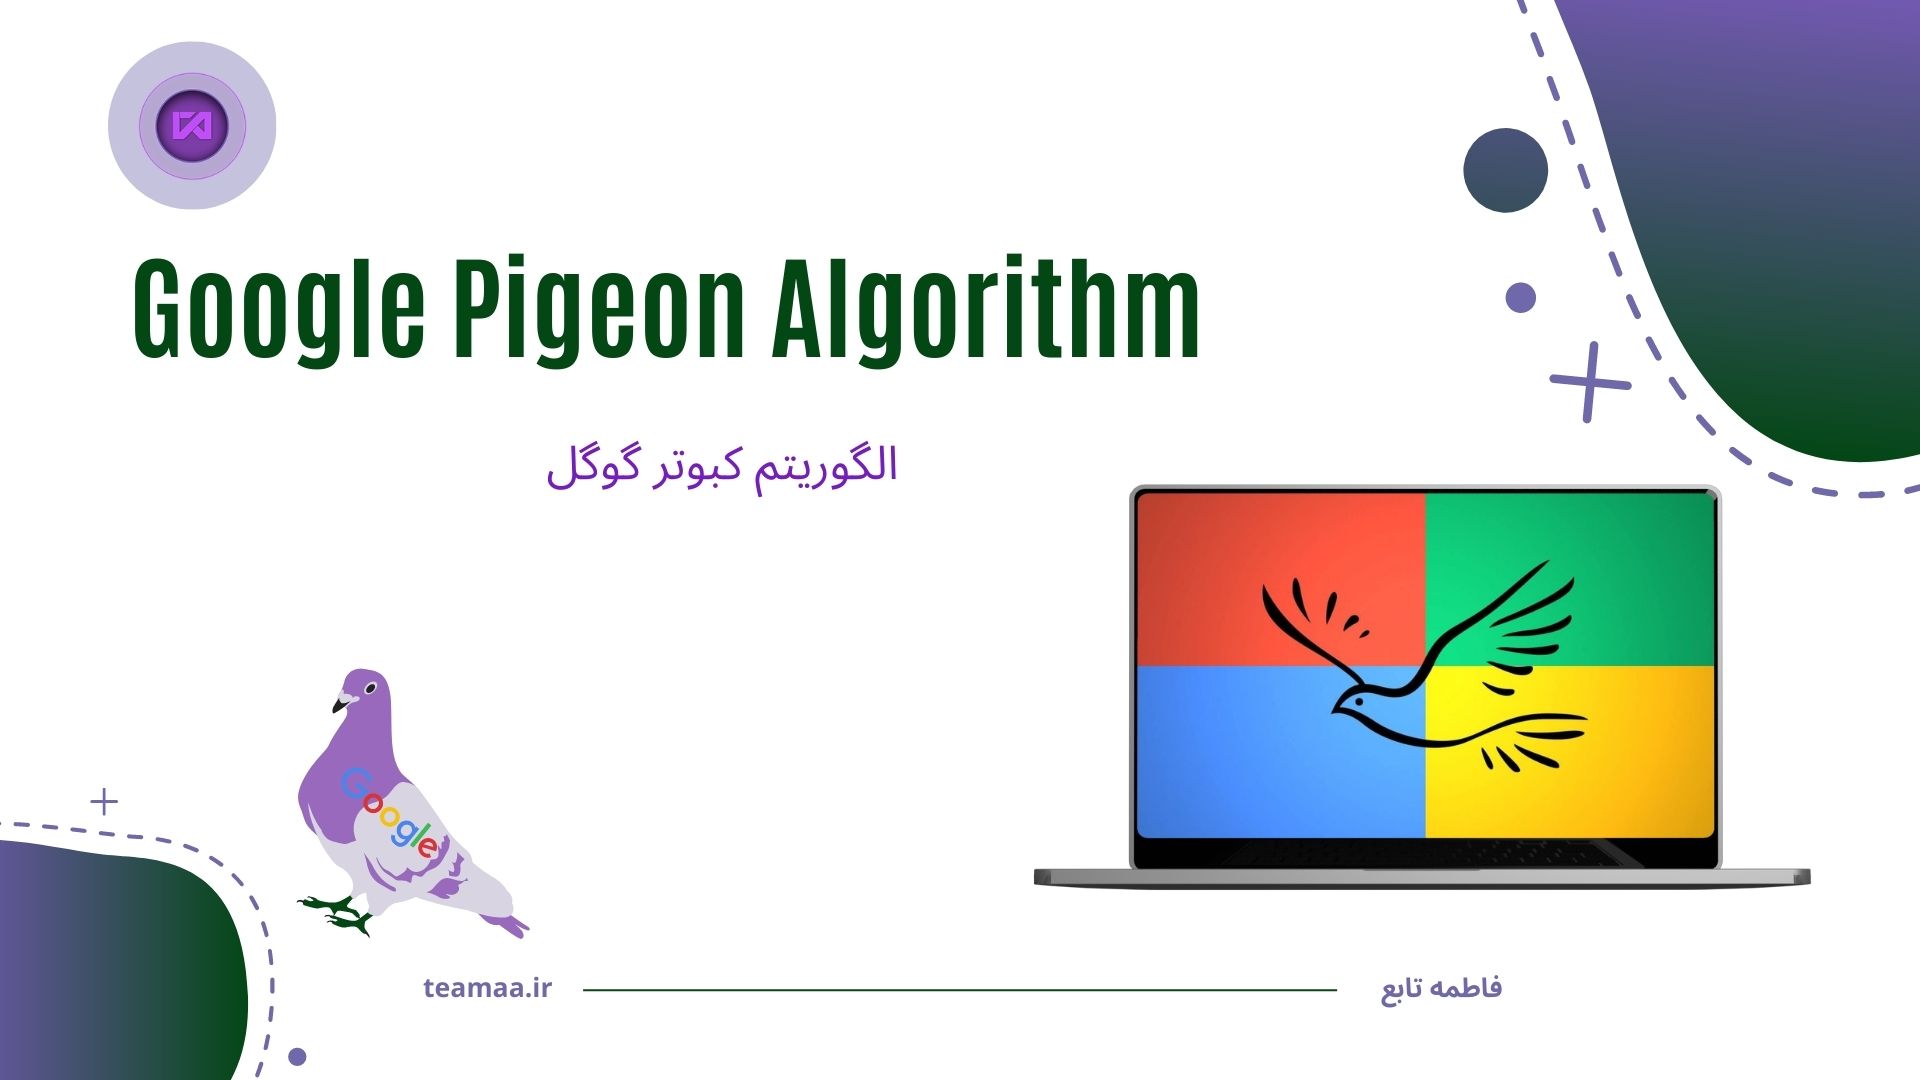 https://teamaa.ir/Assets/Images/Blog/TEAMAA-(PU2Dz1qG)_Google Pigeon Algorithm.jpg